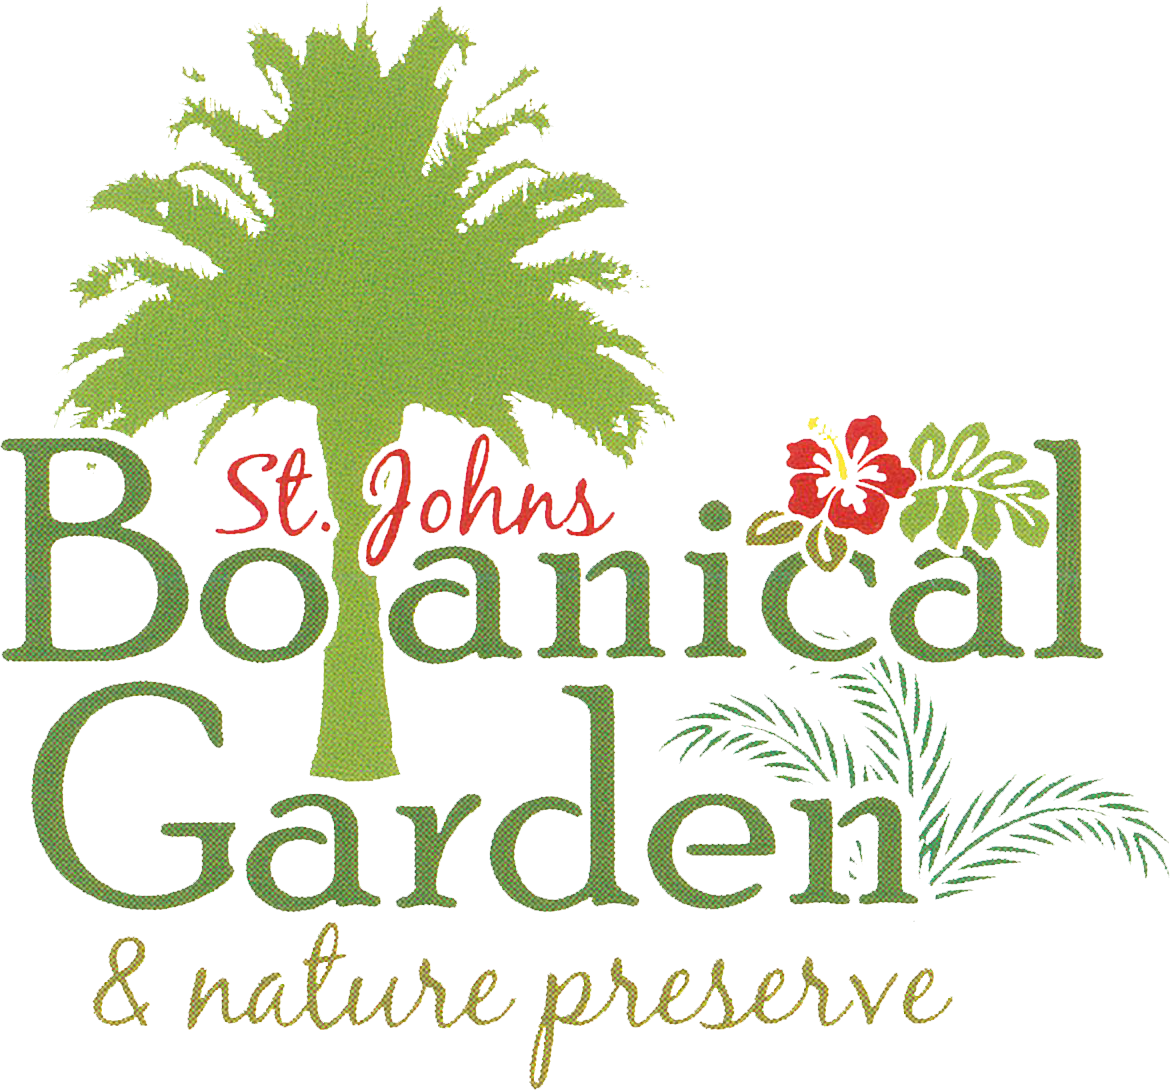 St. Johns Botanical Garden